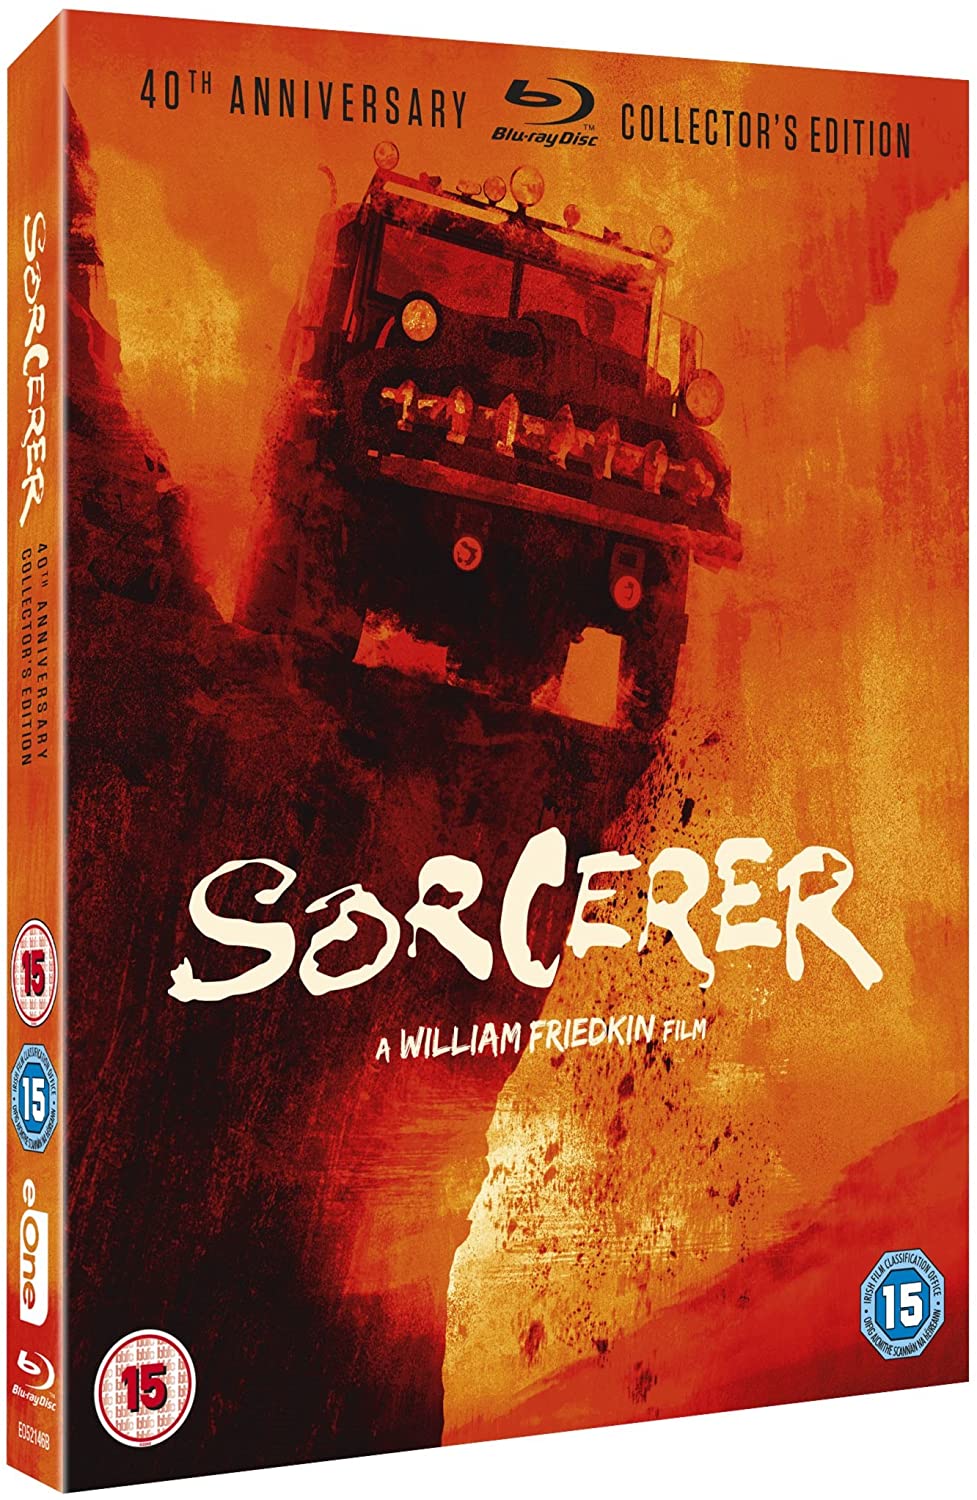 Sorcerer -  Thriller/Drama [Blu-ray]